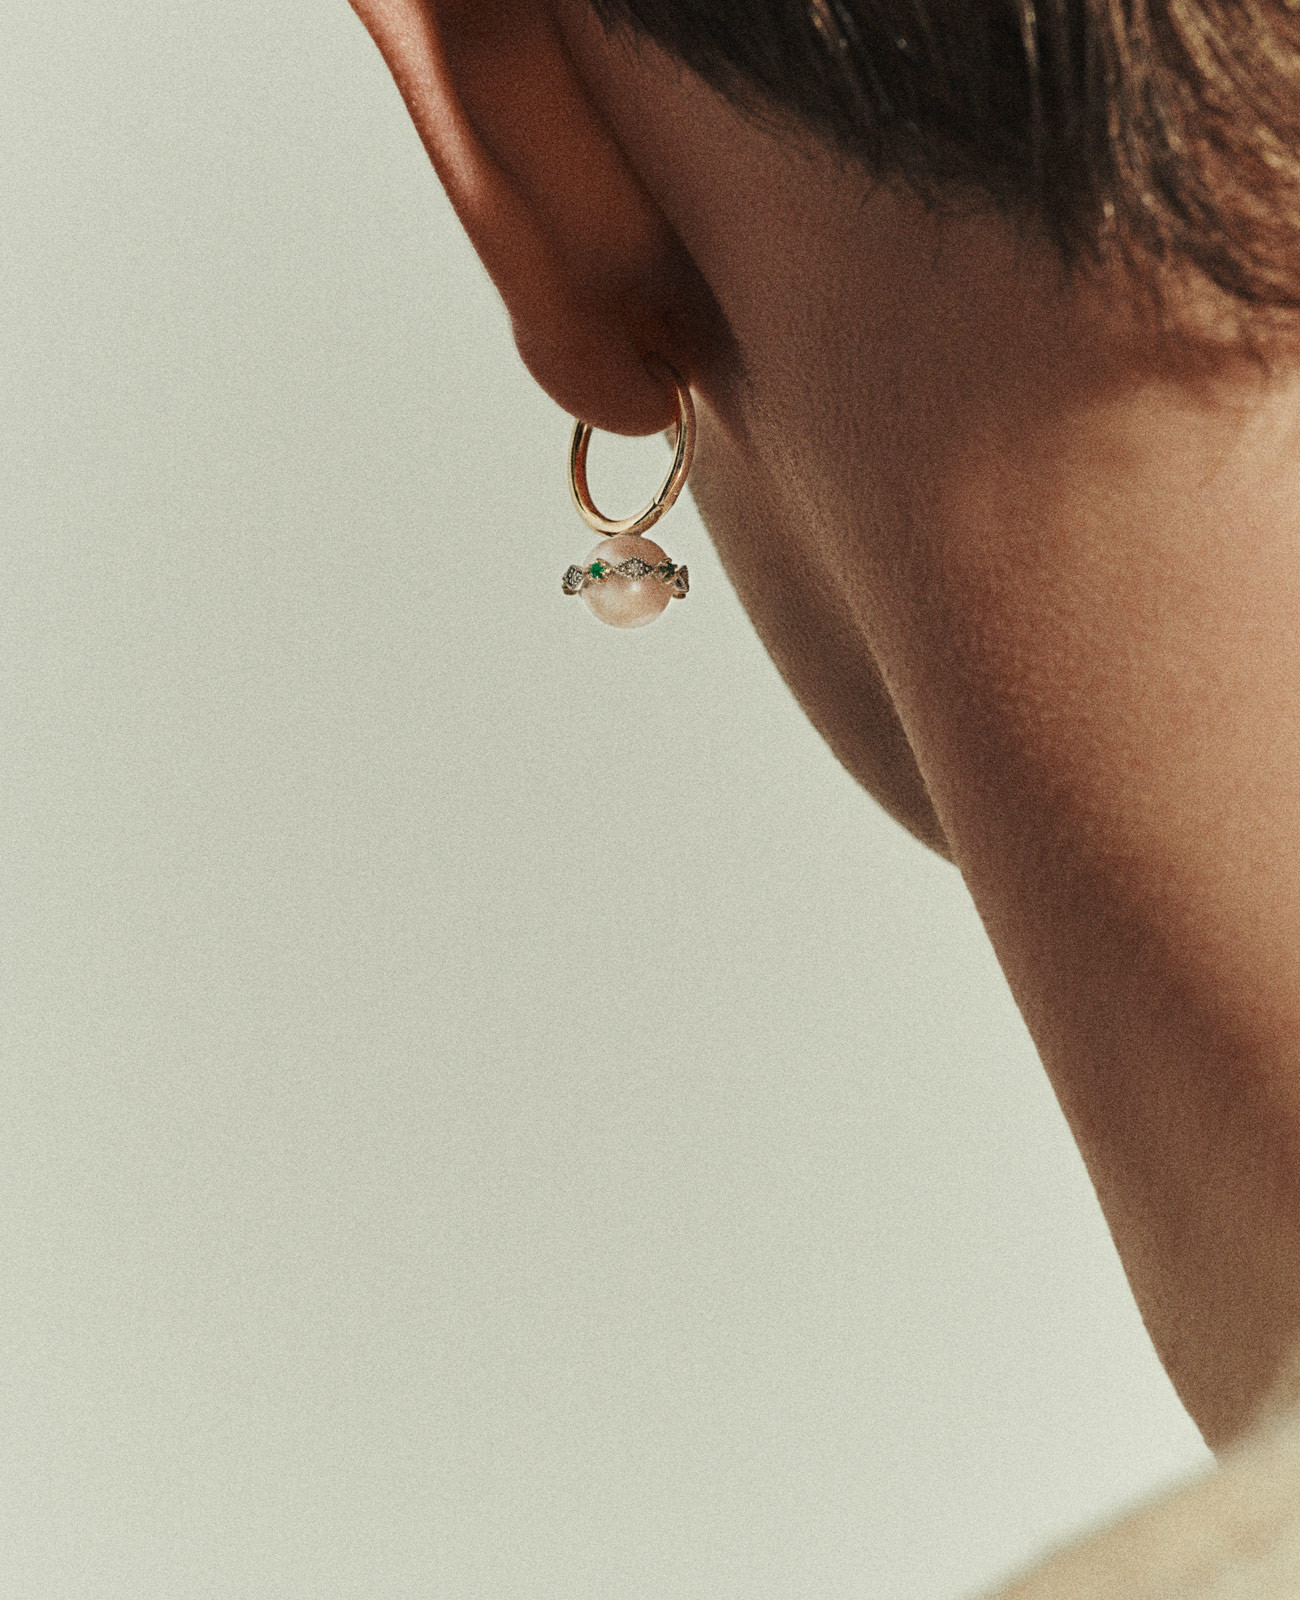 CHELSEA N°3 earring pascale monvoisin jewelry paris